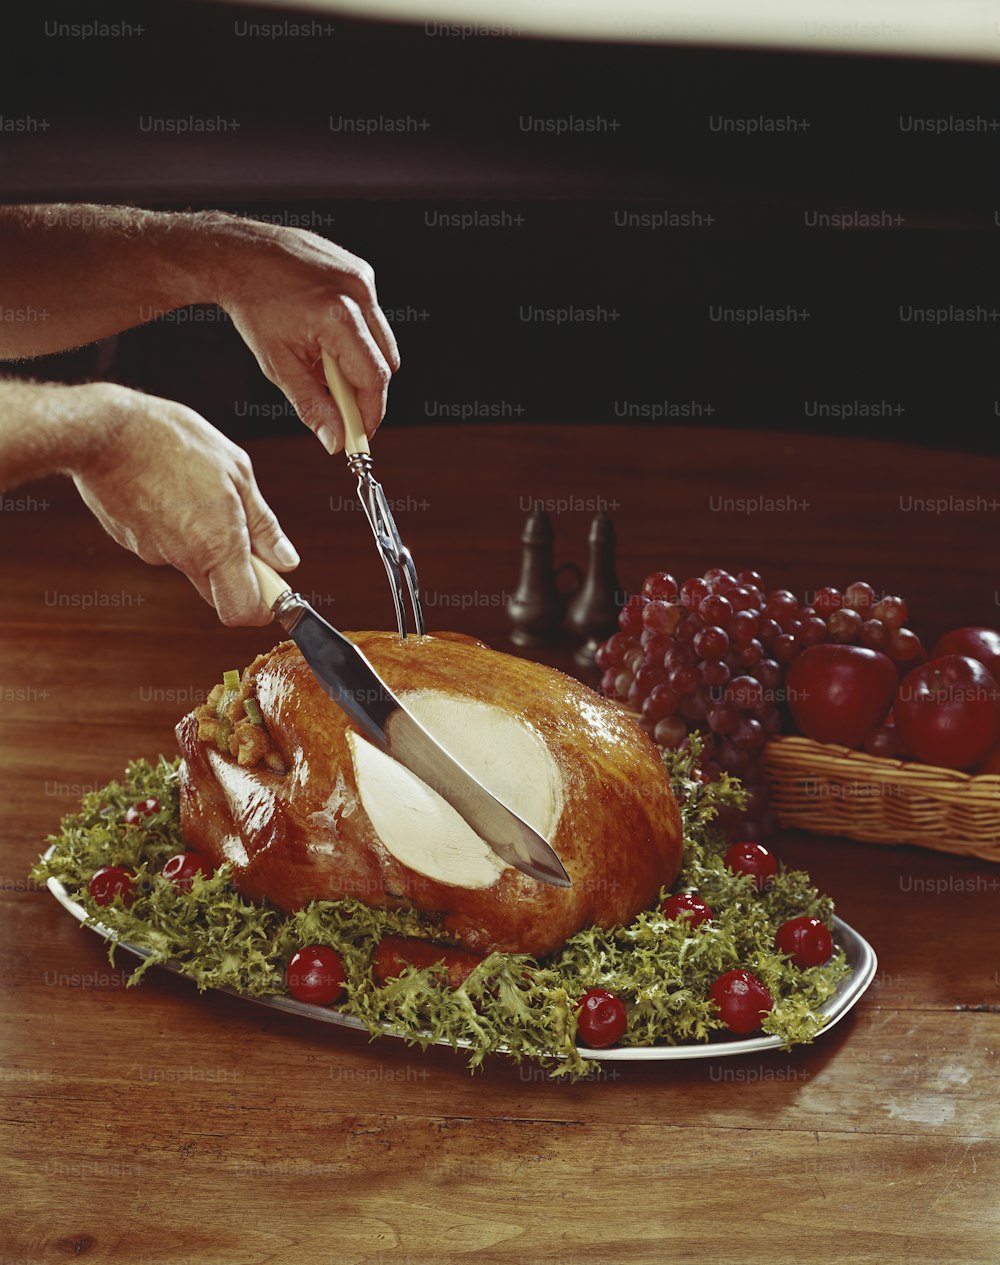 a person cutting a turkey on a platter